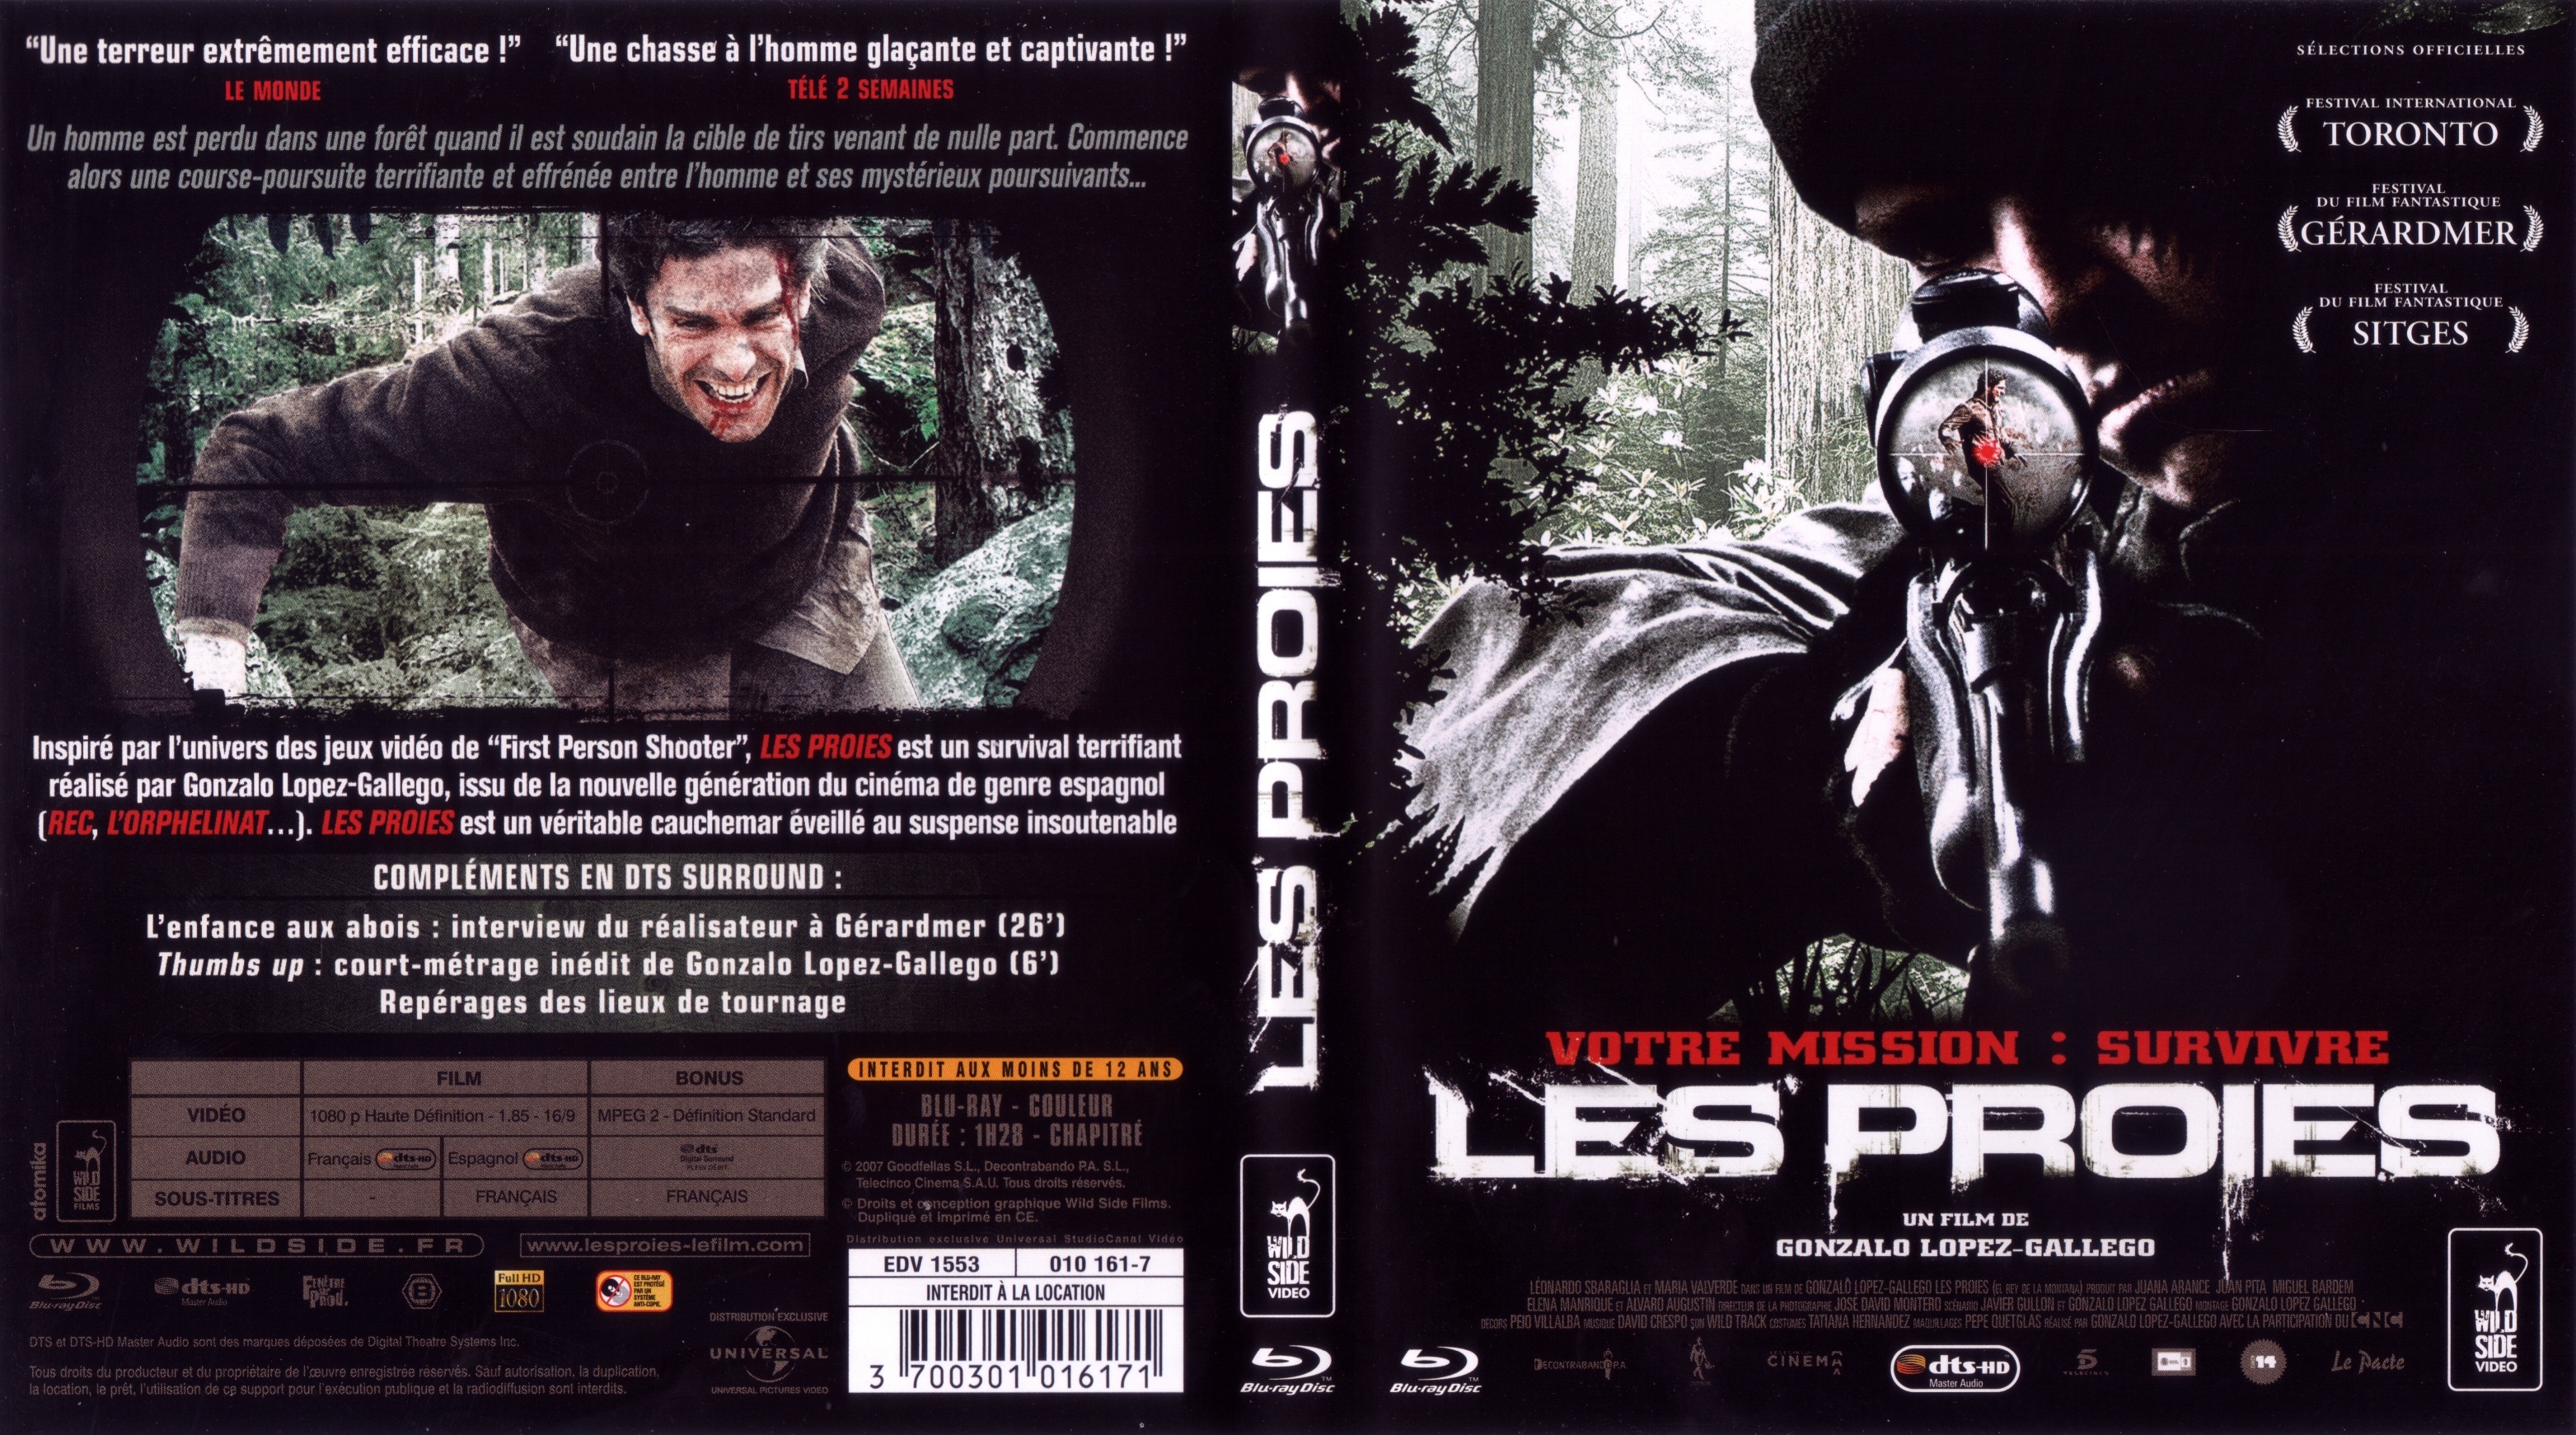 Jaquette DVD Les proies (2008) (BLU-RAY)